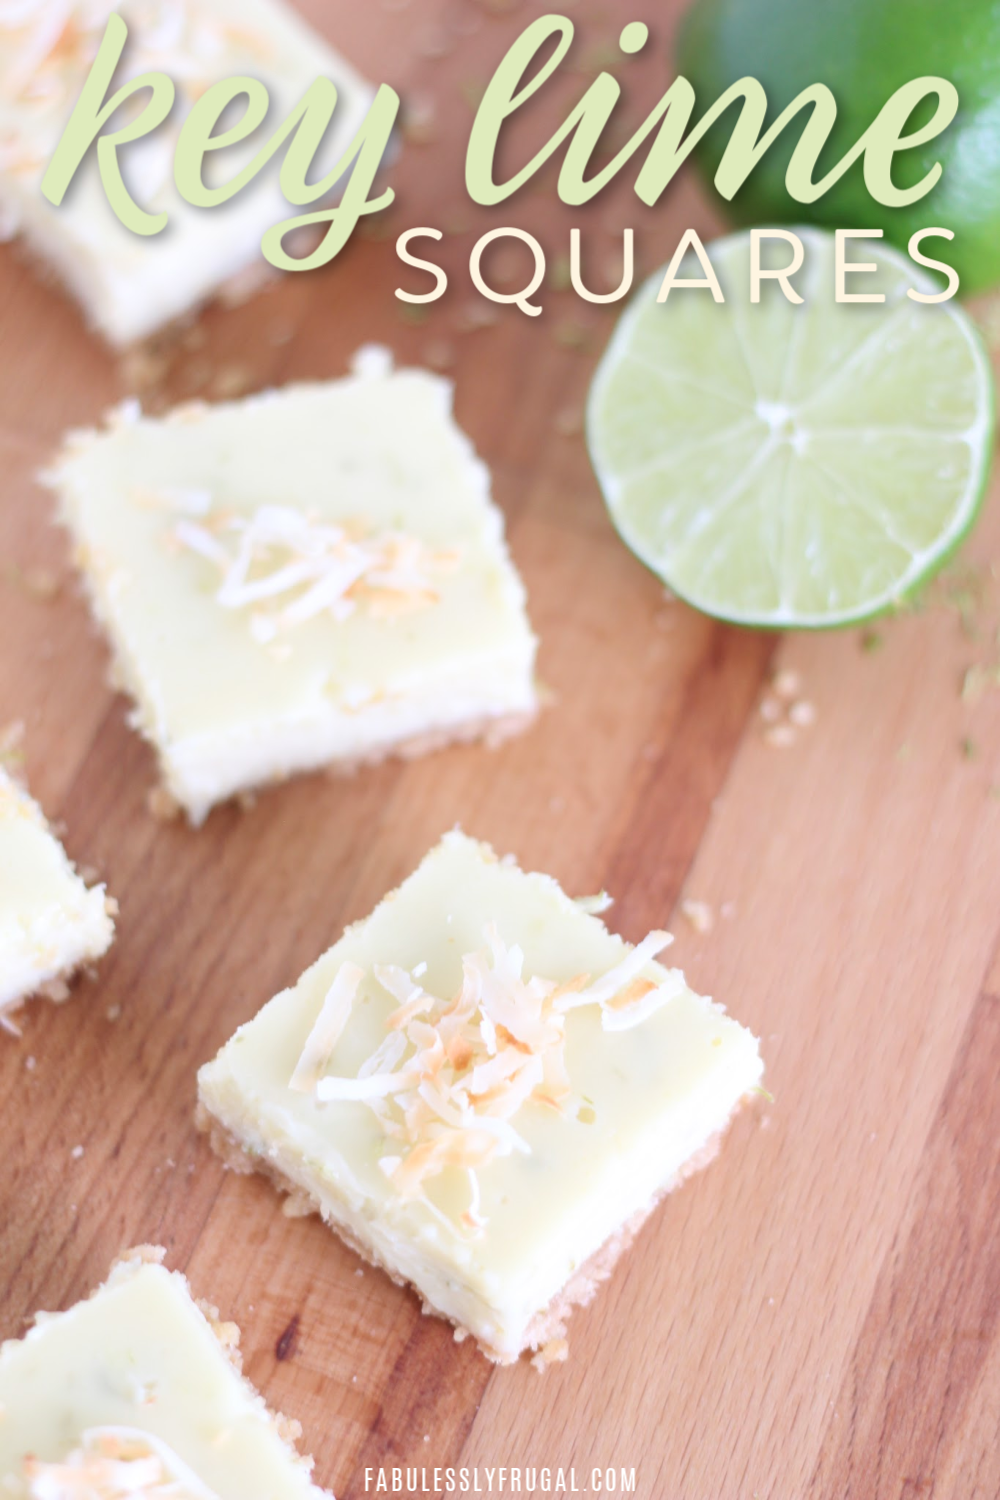 Key lime squares